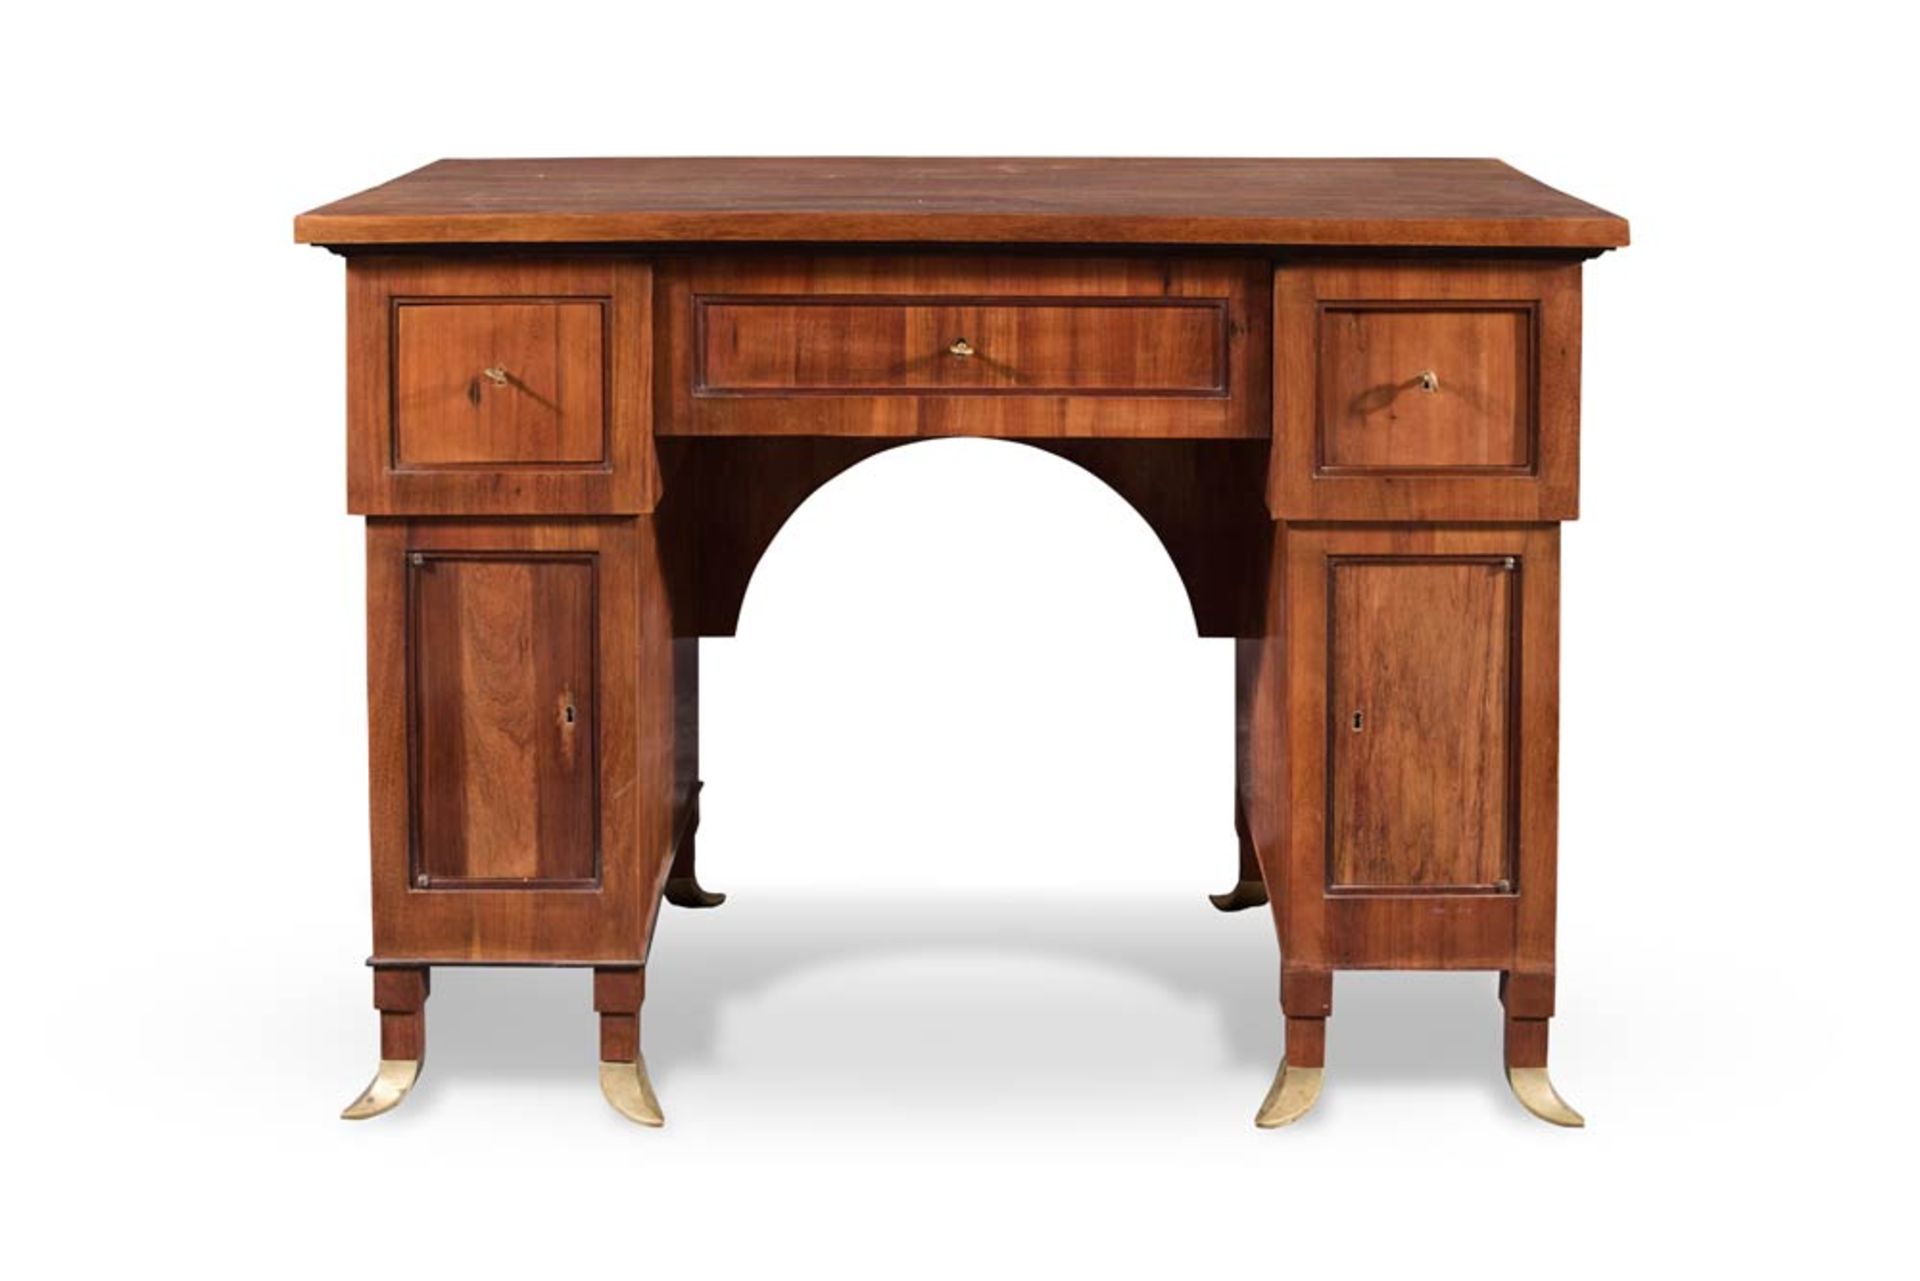 Maoghany veneered desk, second half of 19th Century.